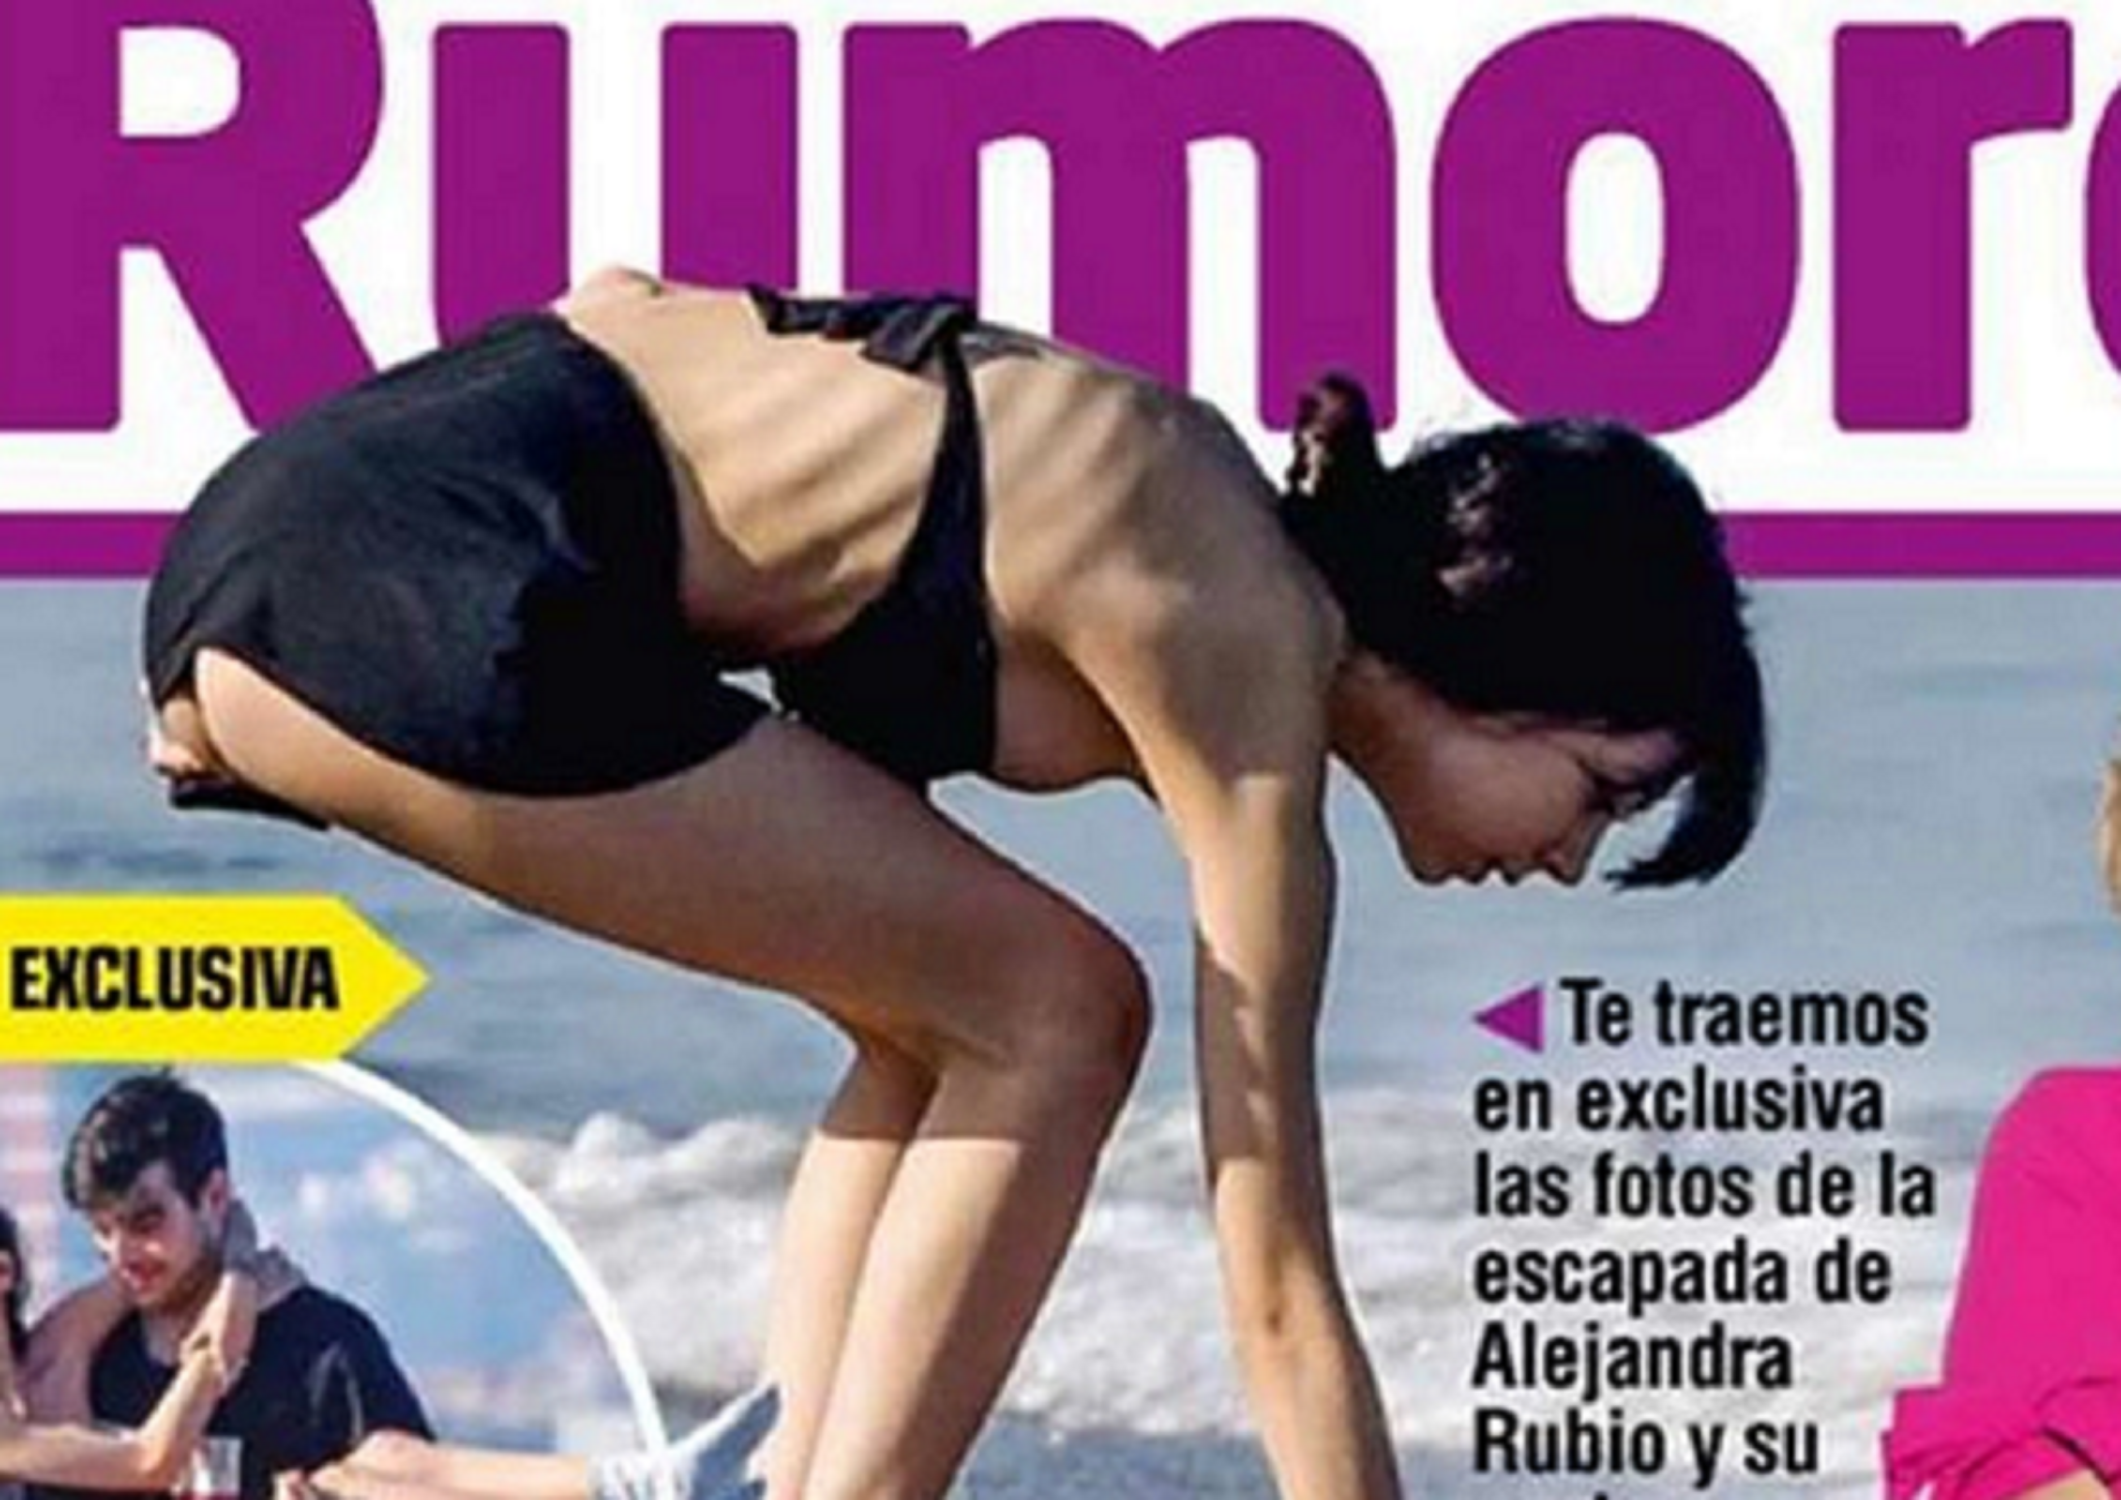 Alejandra Rubio, hija de Terelu, acusada de fomentar la anorexia